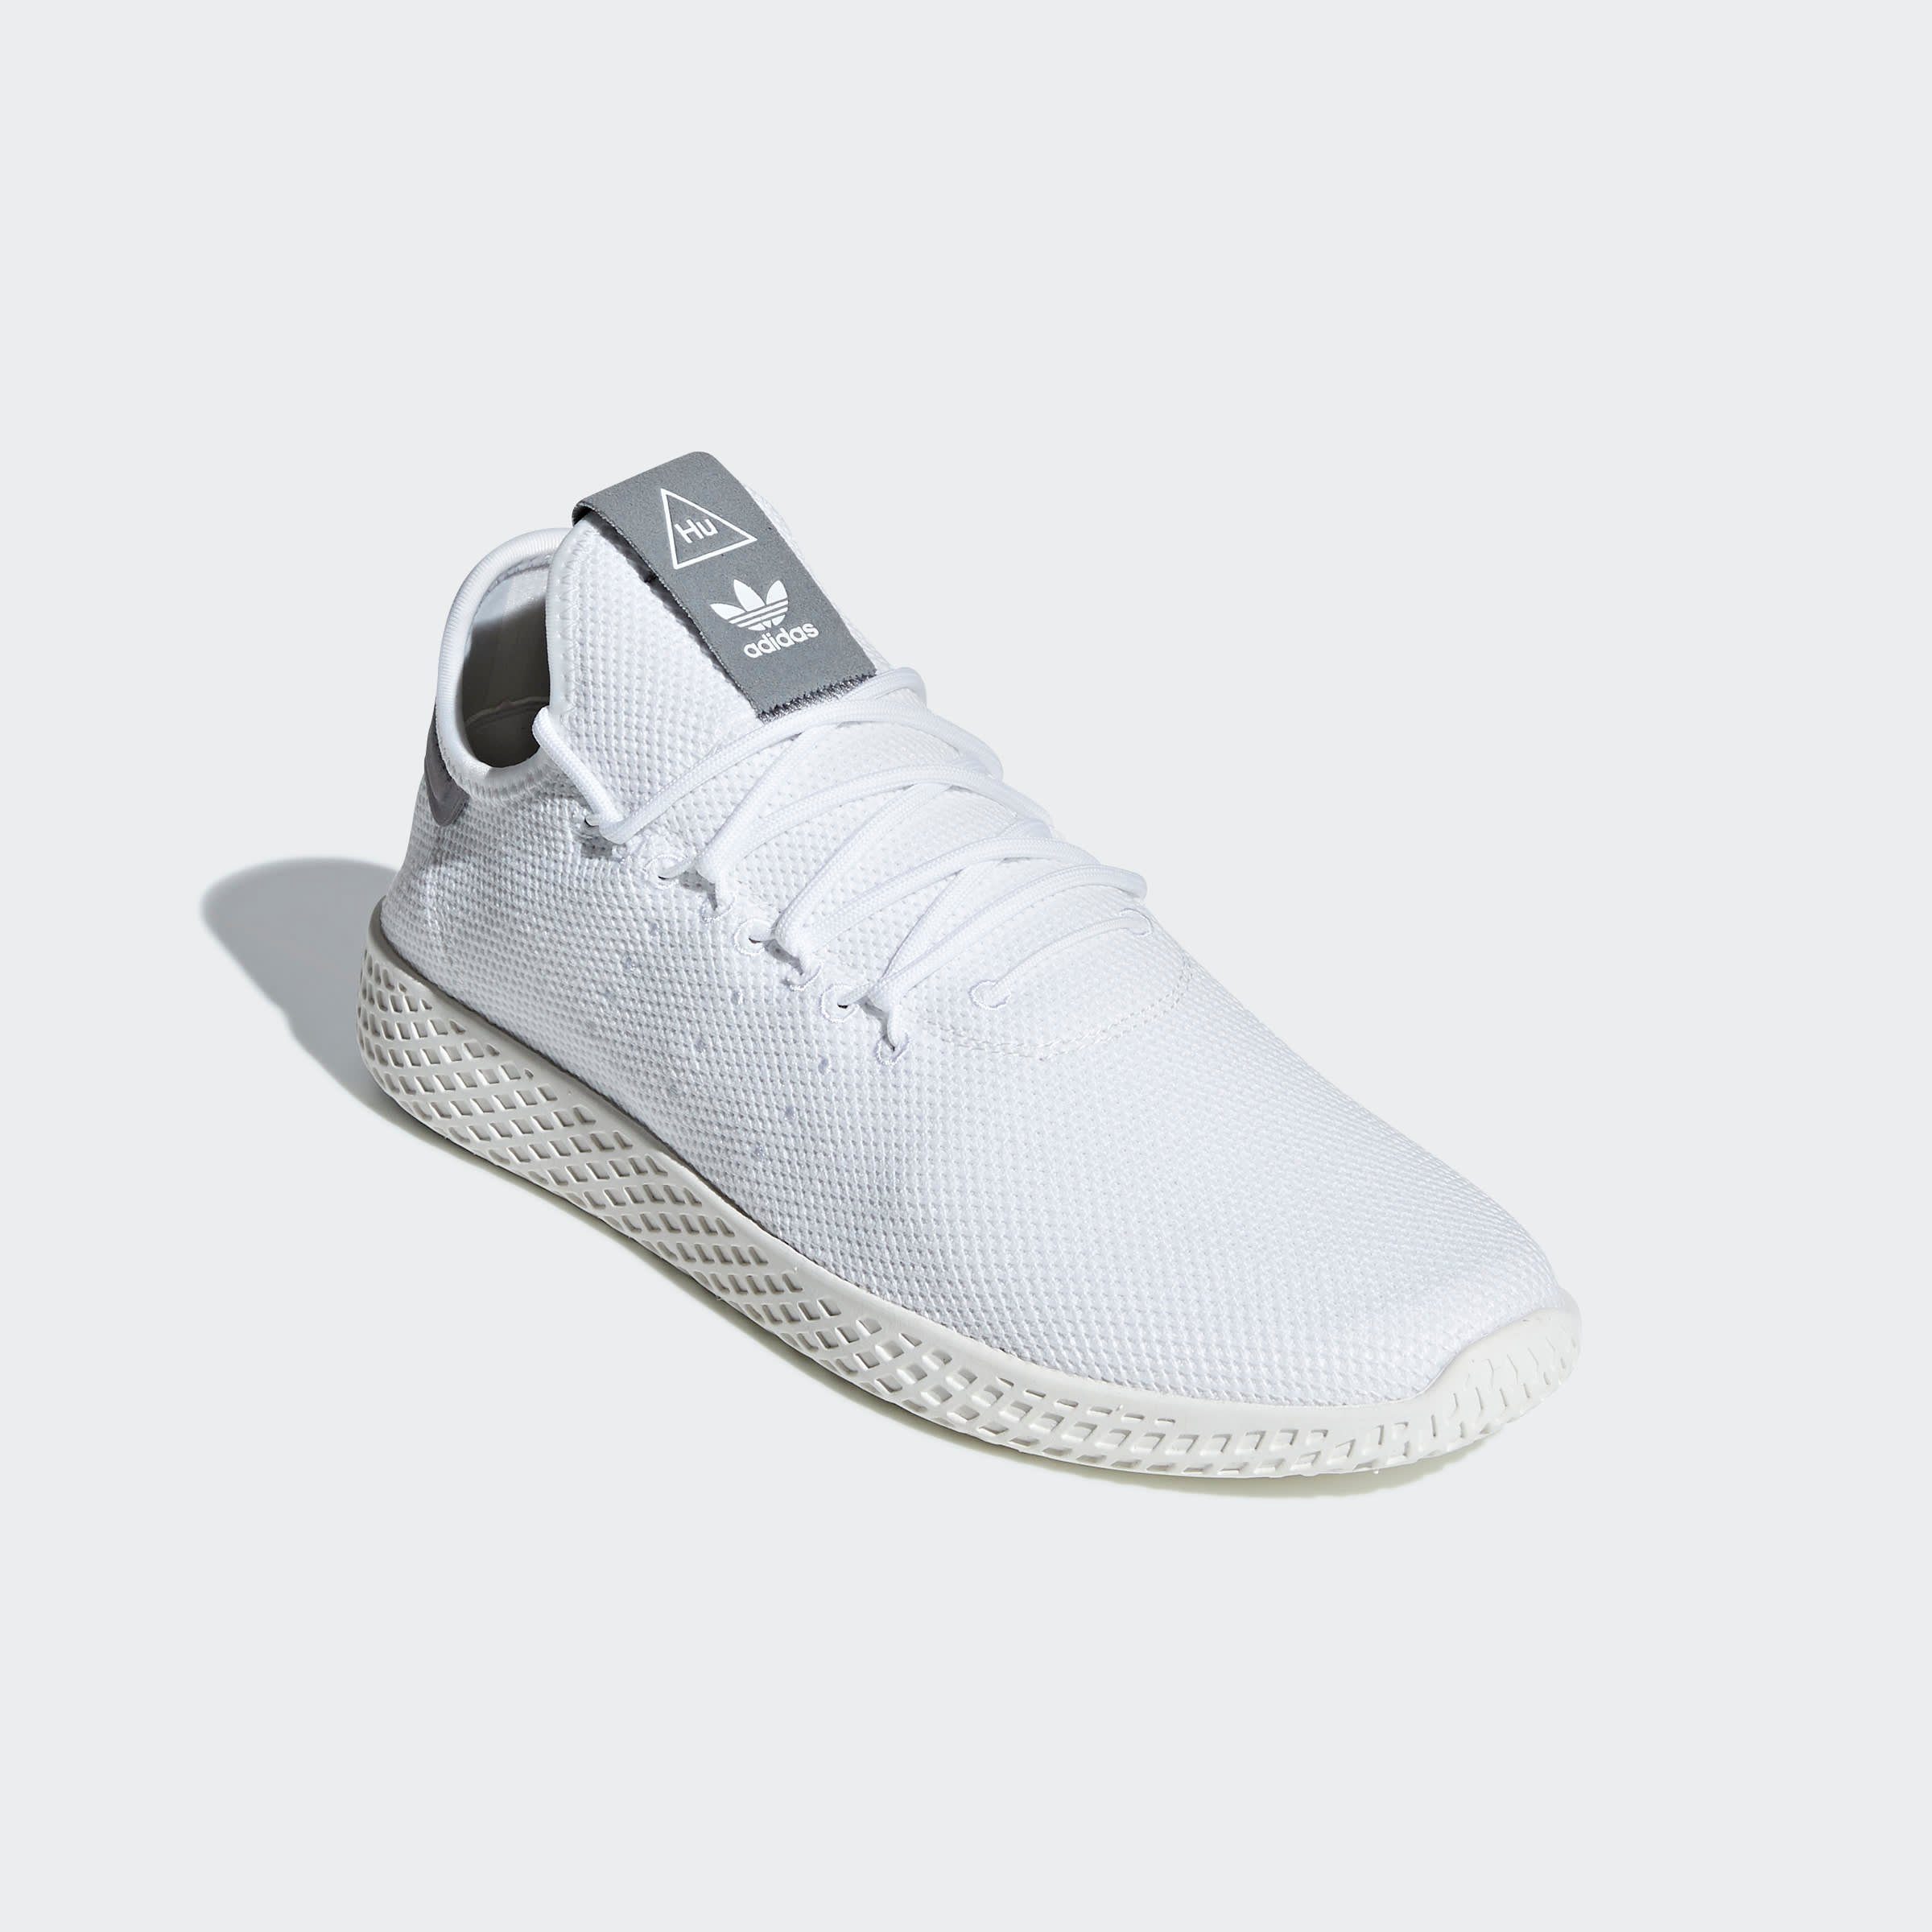 adidas Originals »PHARRELL WILLIAMS TENNIS HU« Sneaker online kaufen | OTTO